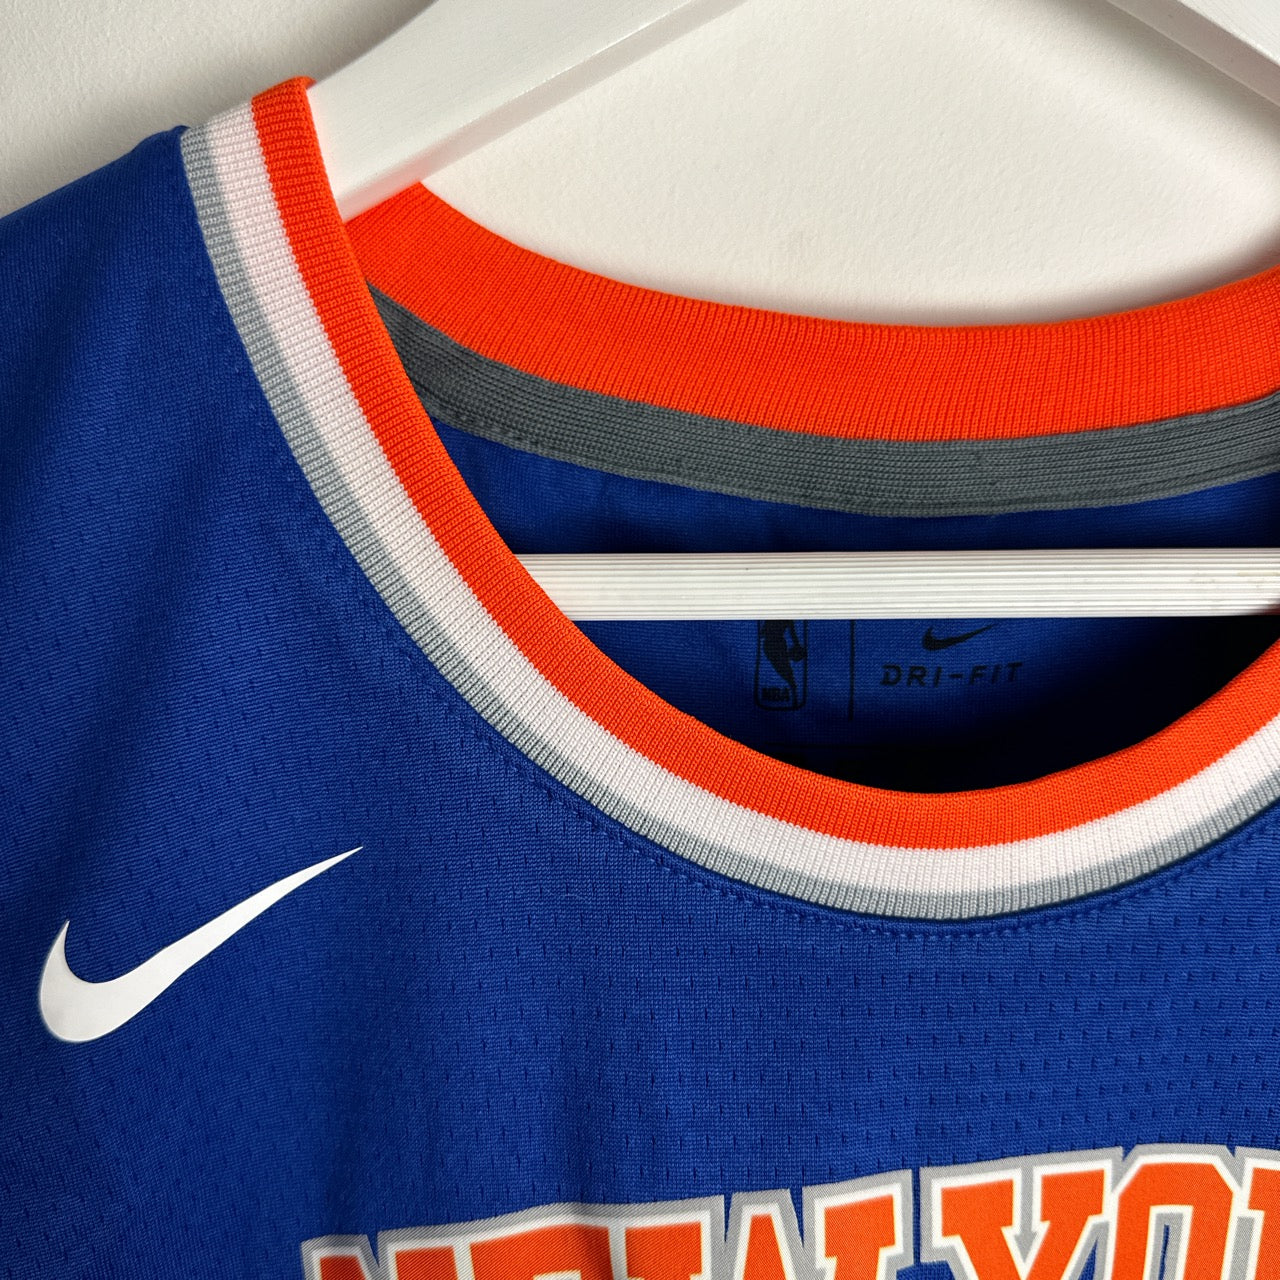 New York Knicks RJ Barrett Nike jersey - Youth XL